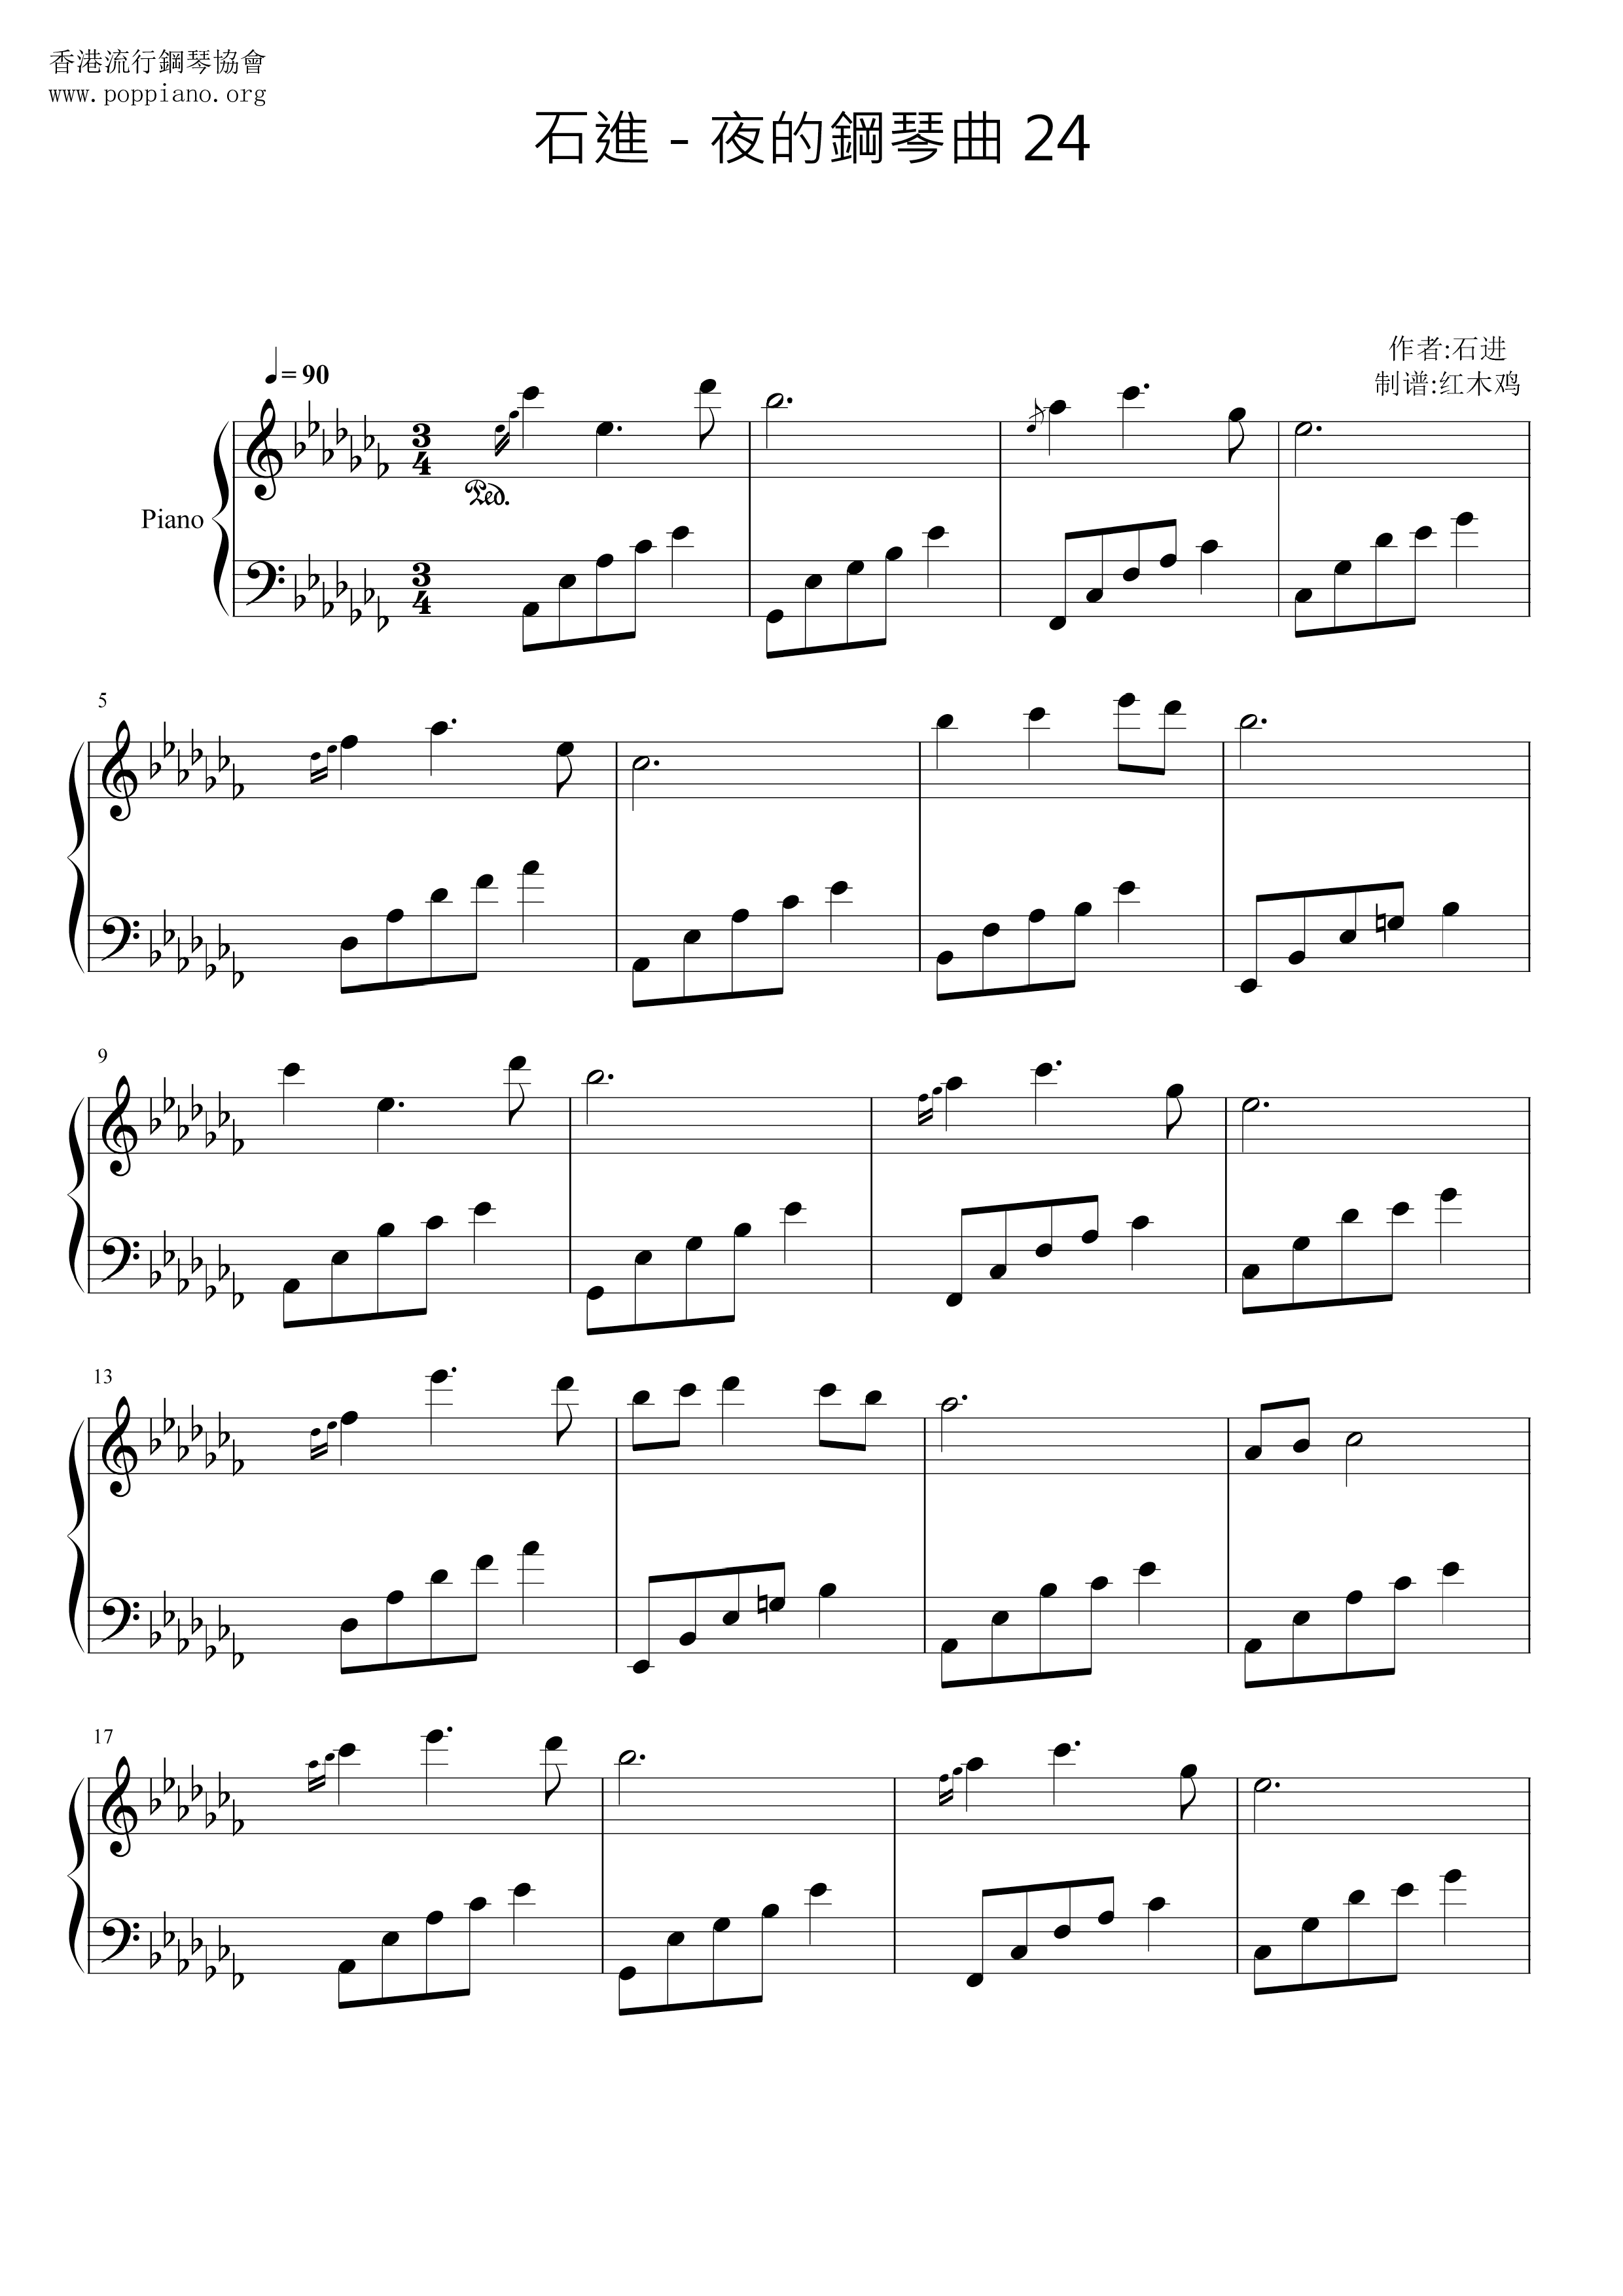 Melody Of The Night 24 Score